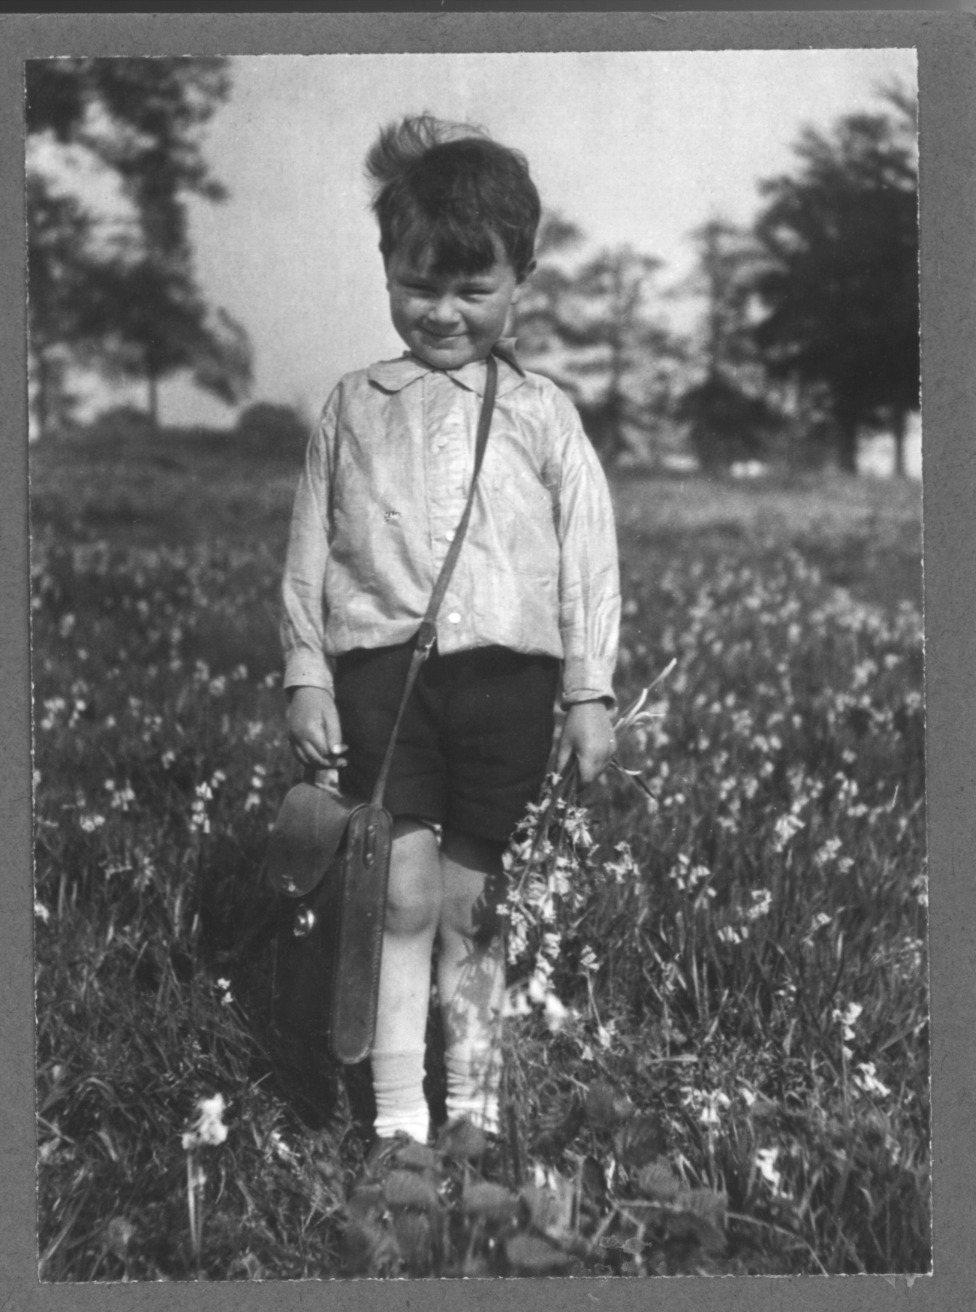 John on his 4th Birthday, North Mimms, UK, 1925